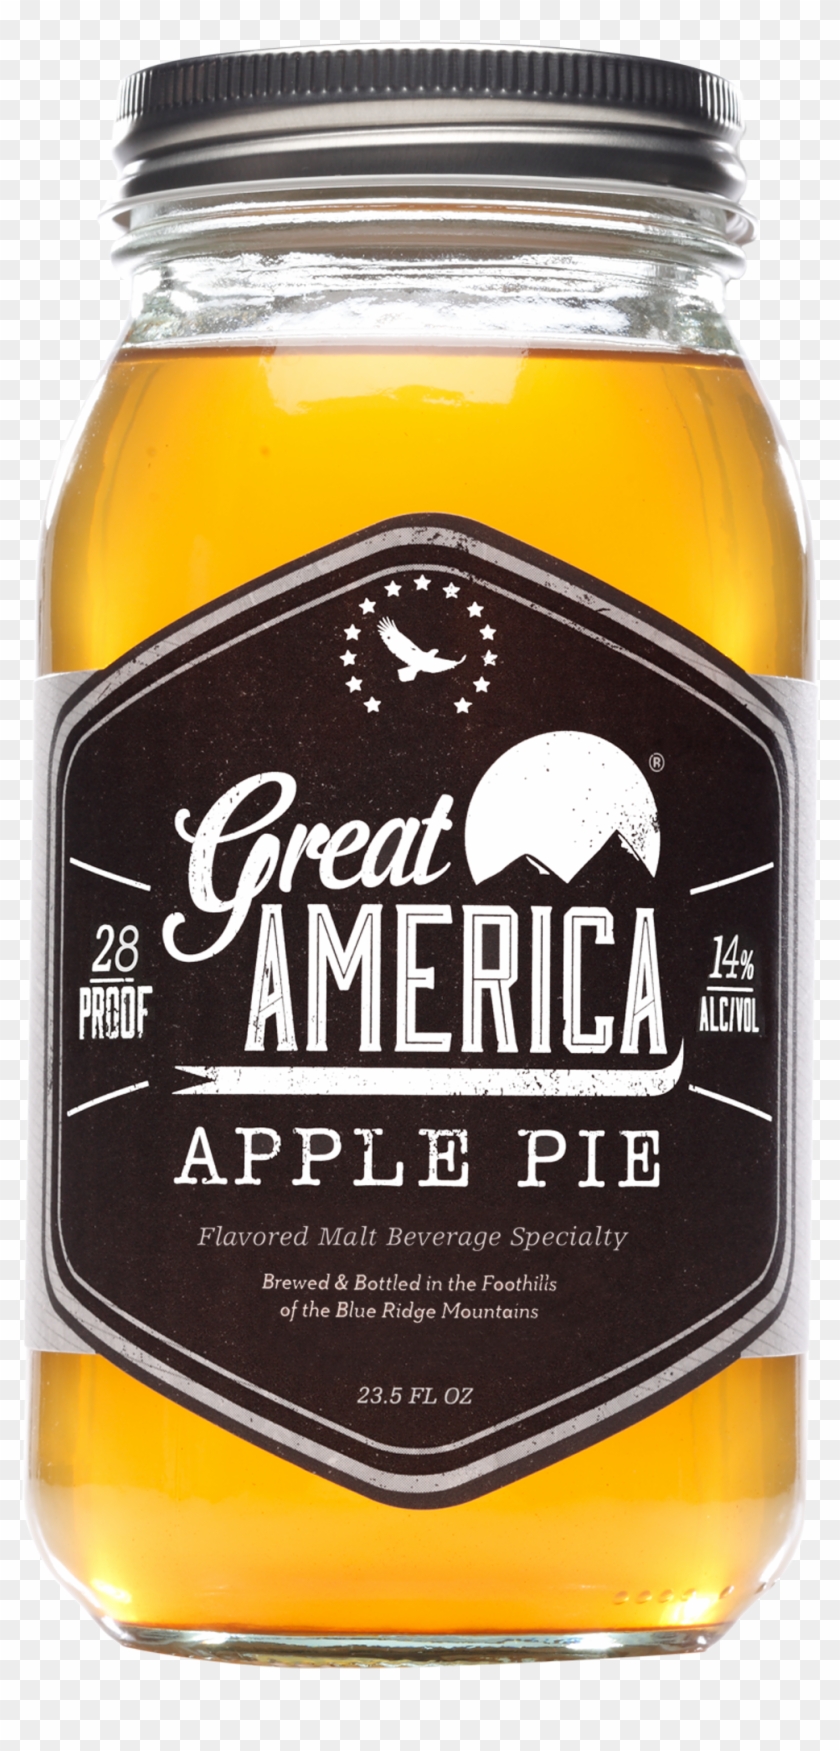 Mountain Dew Clipart American - Great America Malt Specialty, Apple Pie - 23.5 Fl Oz #1298126